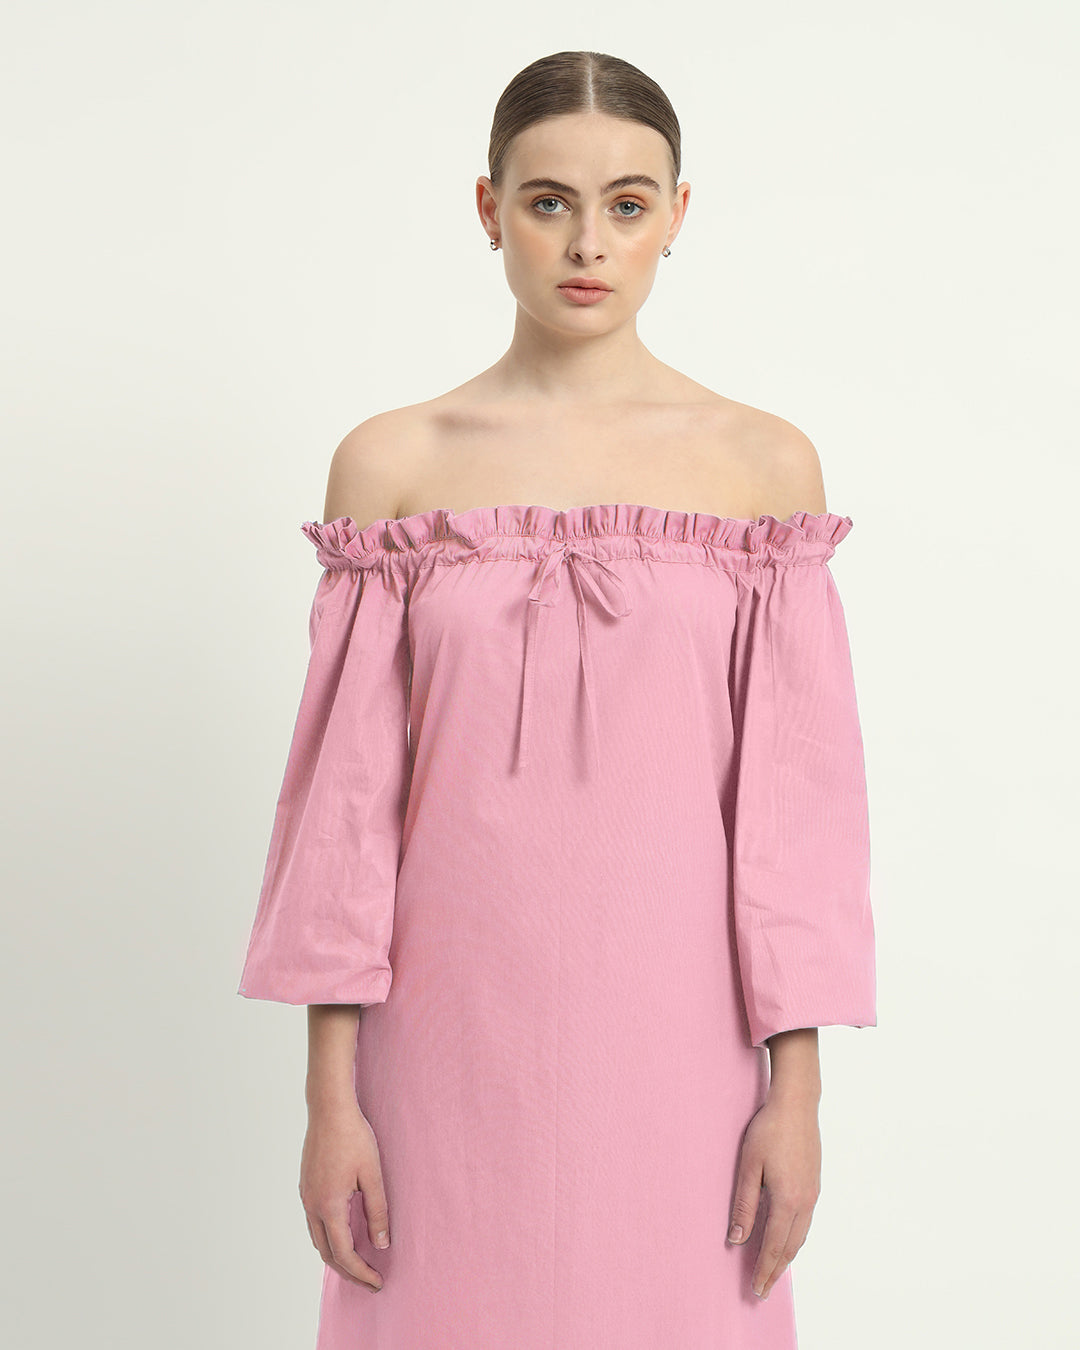 The Carlisle Fondant Pink Cotton Dress